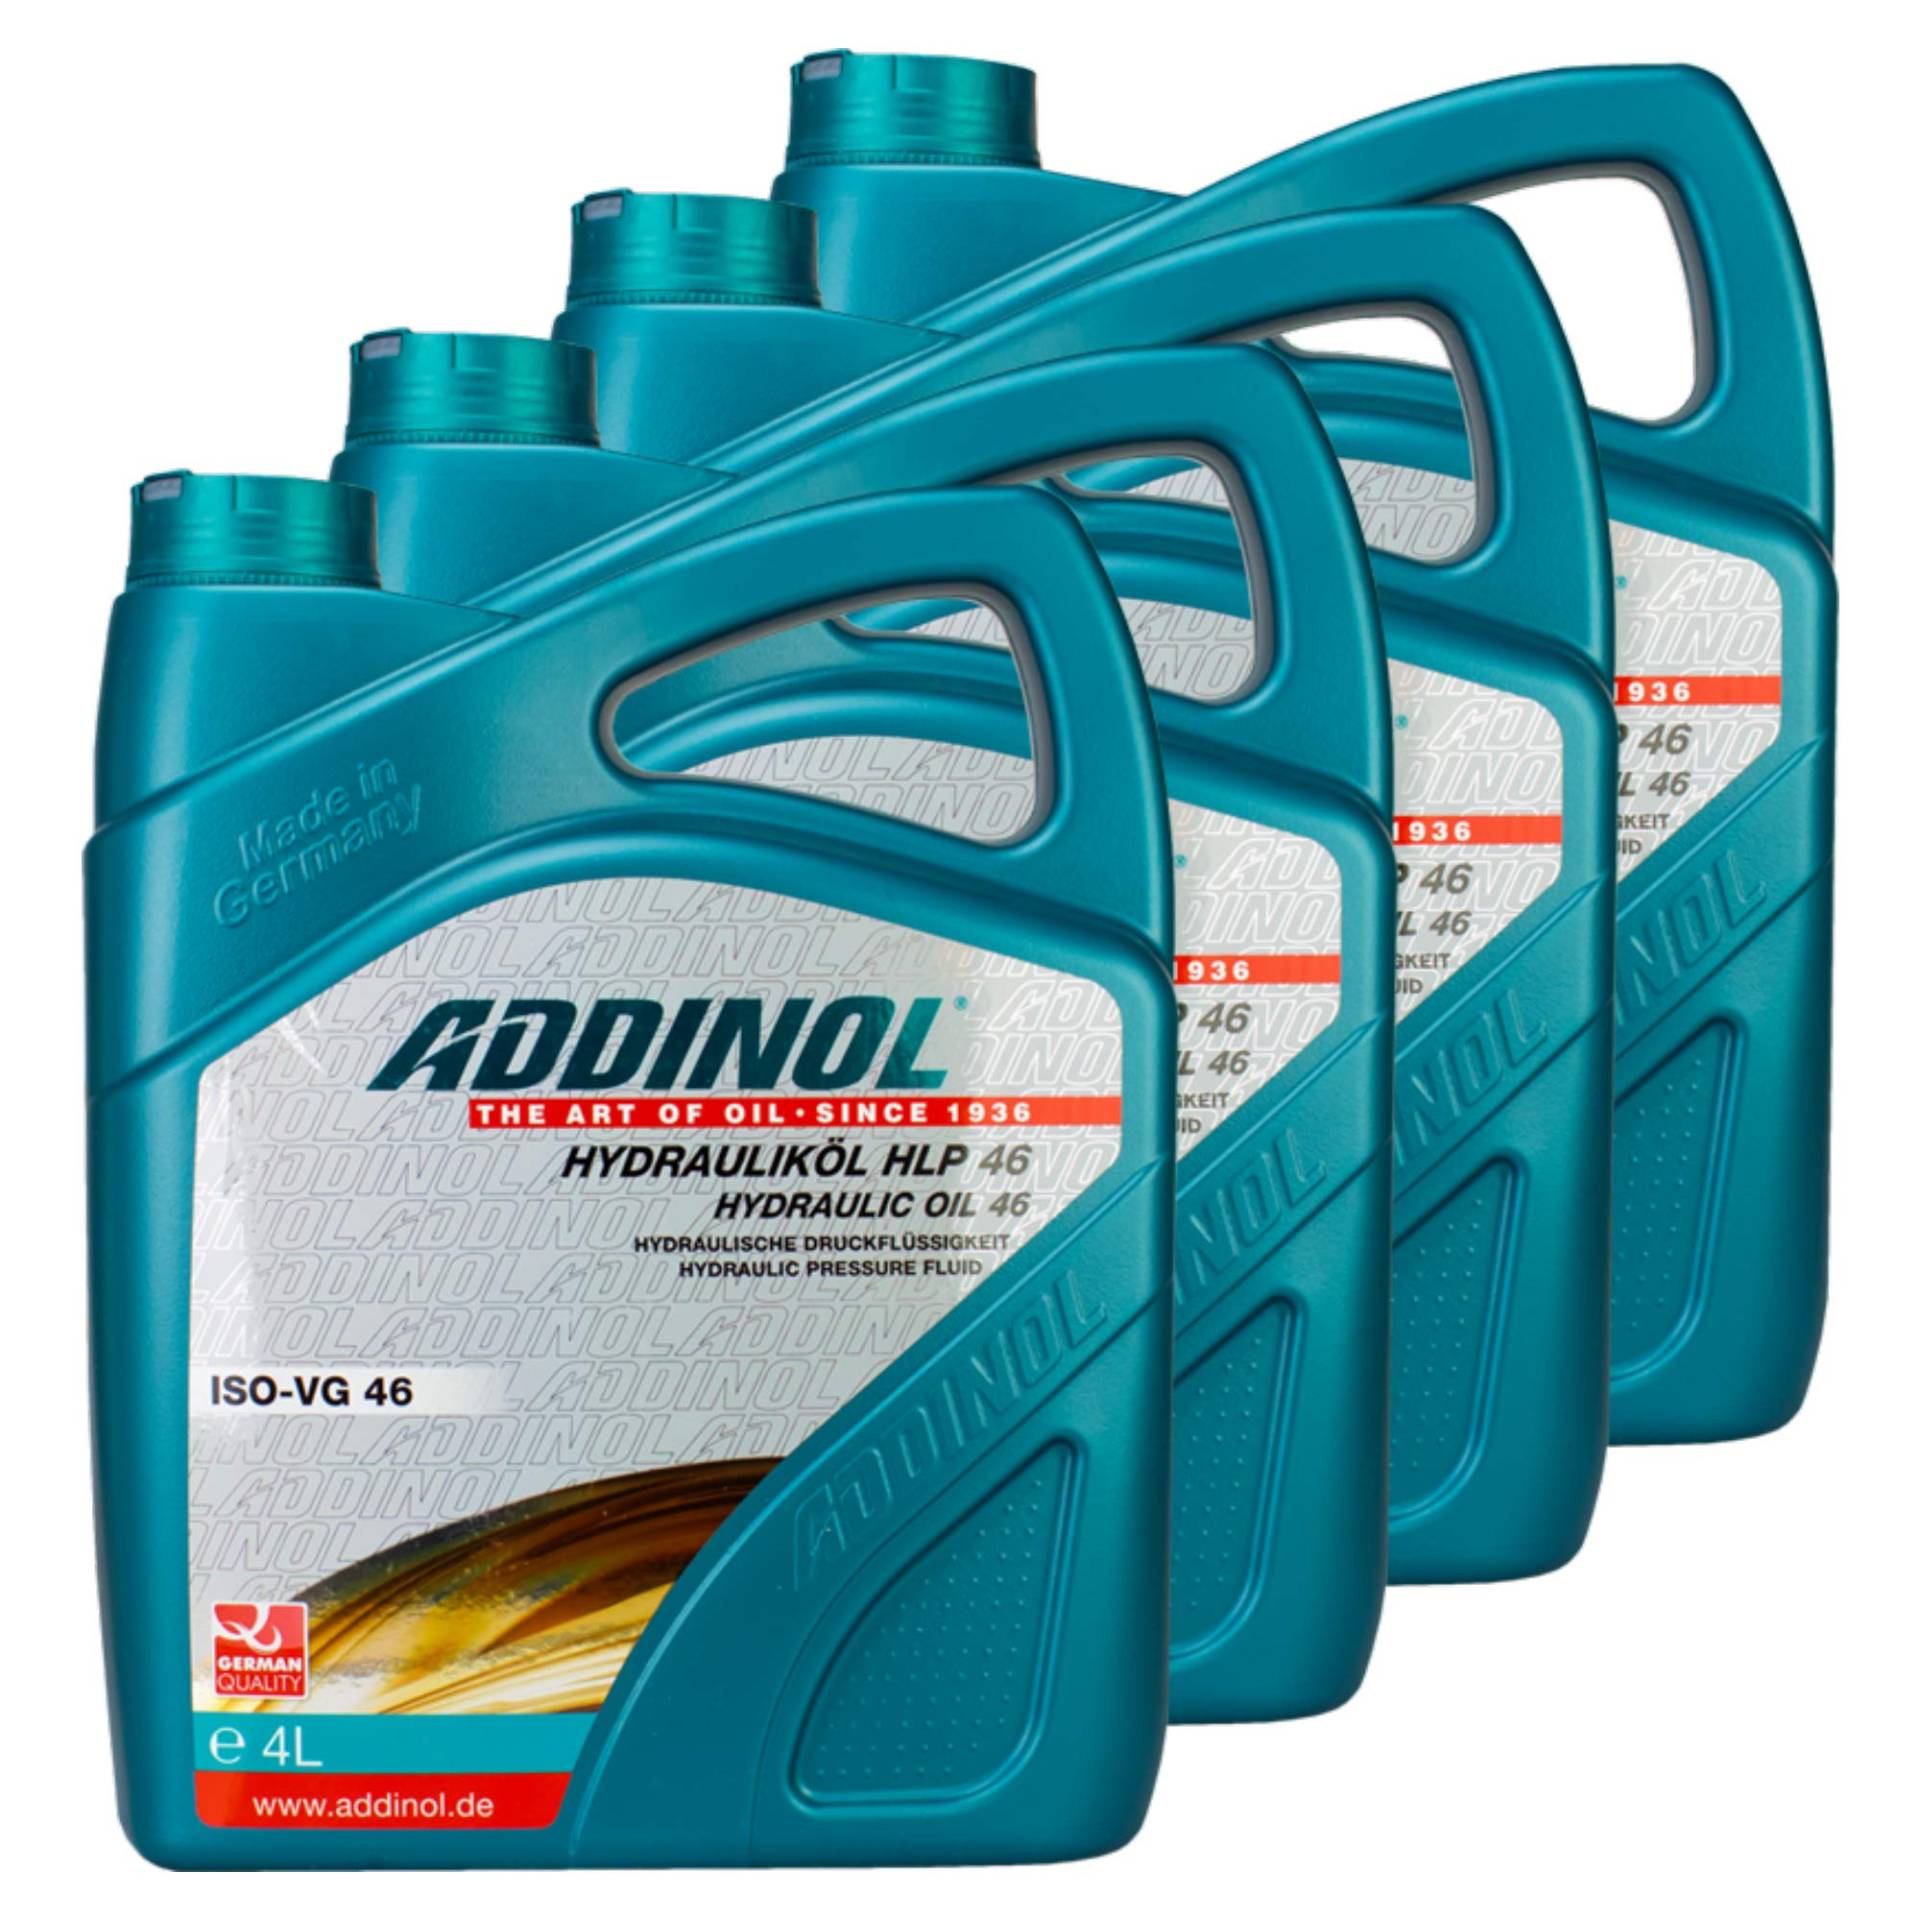 4X Addinol Hydrauliköl Hydraulic Oil Fluid Hlp 46 4L 73200425 von Addinol